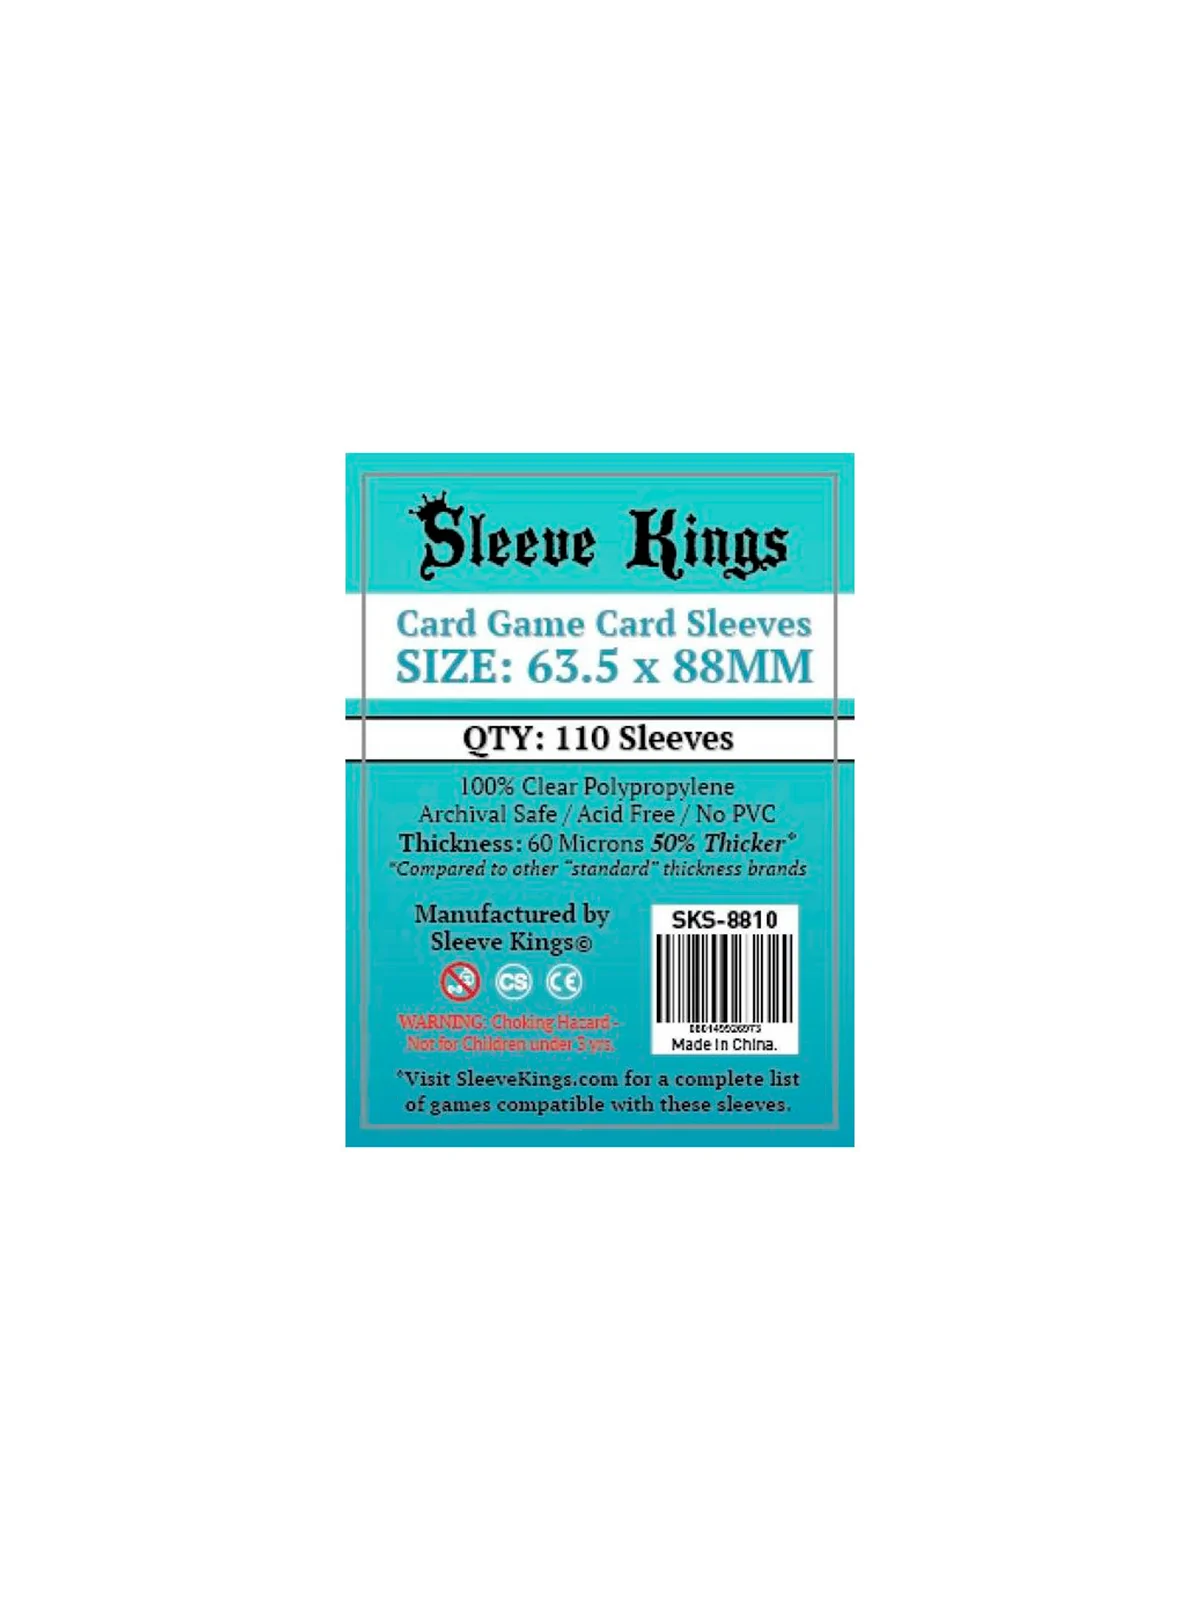 Comprar [8810] Sleeve Kings Card Game Card Sleeves (63.5x88mm) barato 